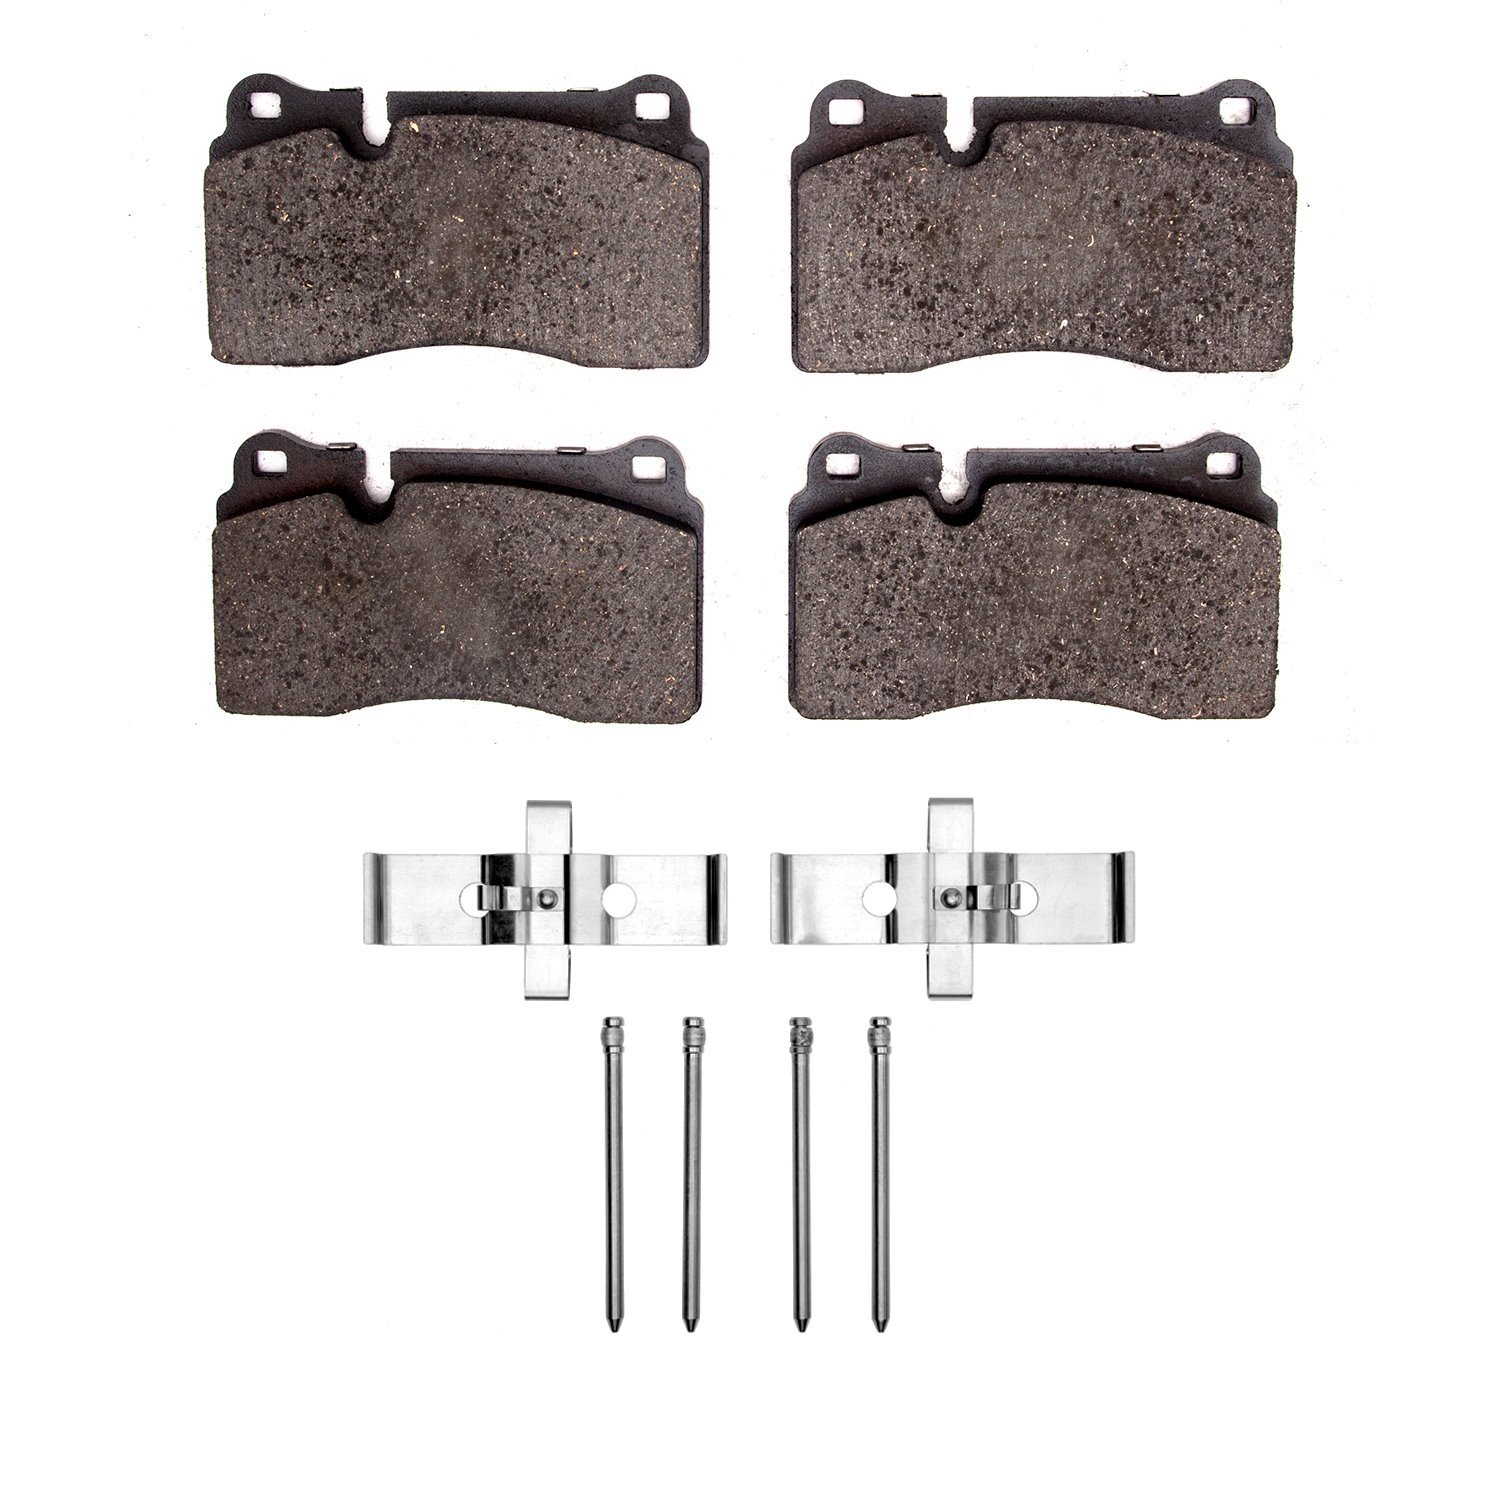 1600-1165-01 5000 Euro Ceramic Brake Pads & Hardware Kit, 2006-2019 Multiple Makes/Models, Position: Front,Rear